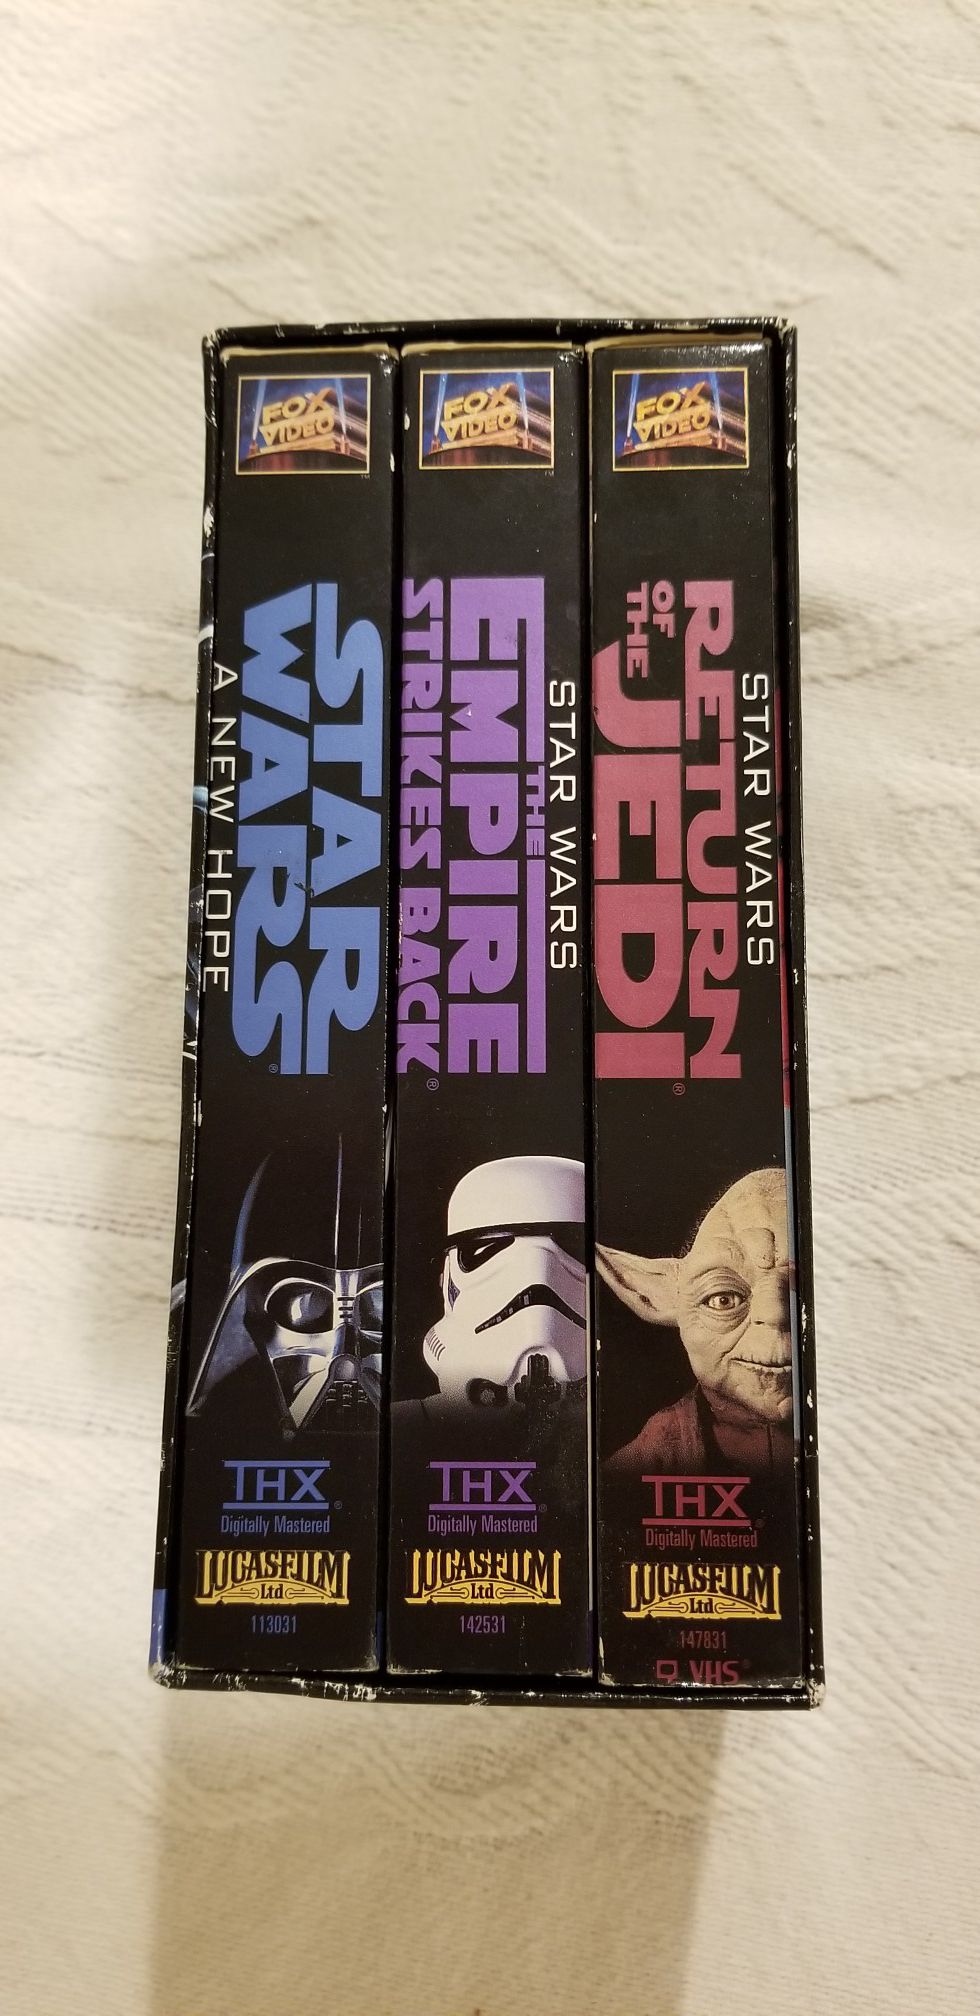 VHS Star Wars tape set